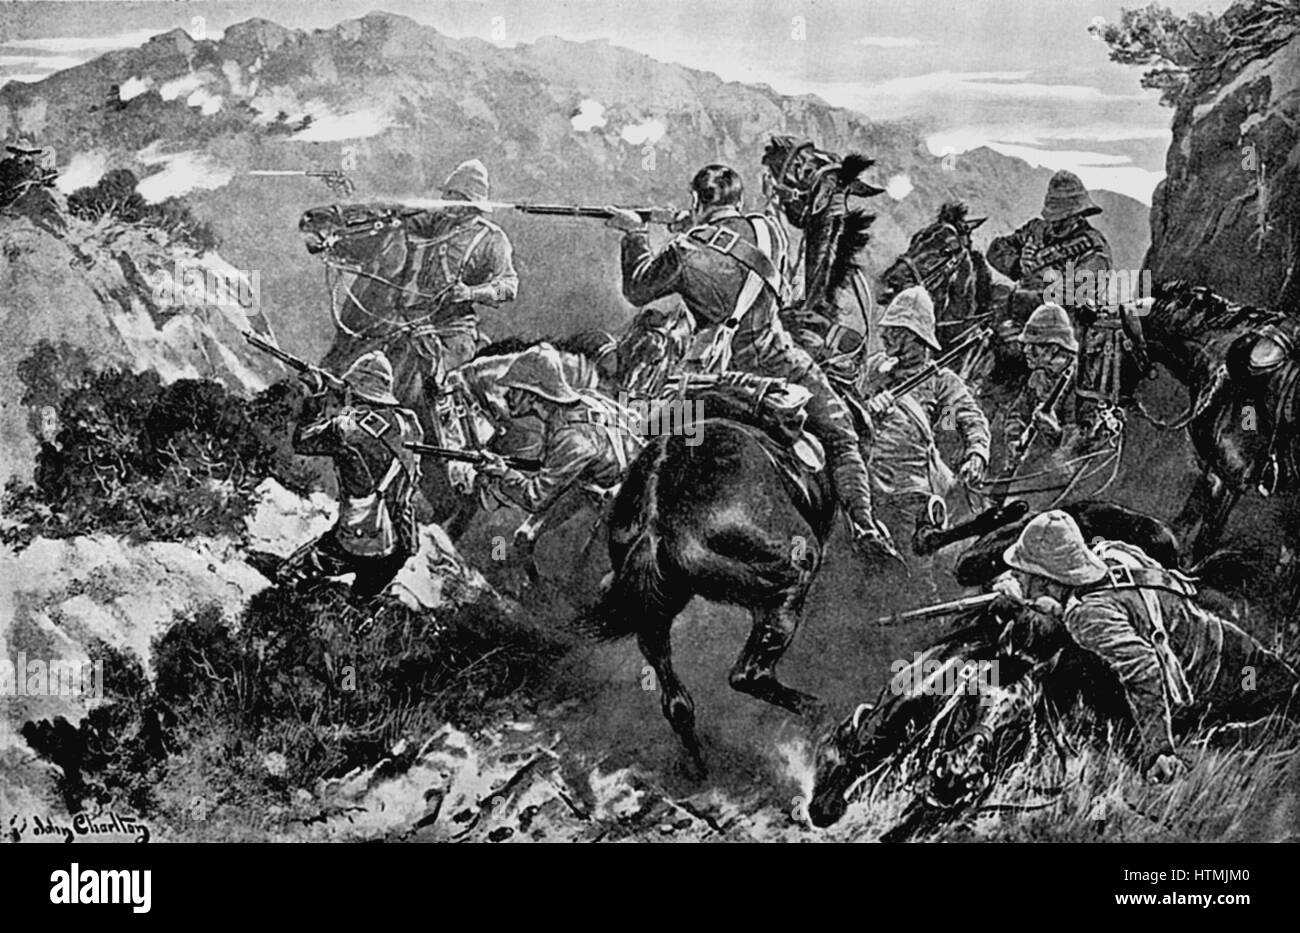 Streikposten der 13. Husaren überrascht in der Nähe der Tugela River (Husaren Hill). 2. Burenkrieg 1899-1902 Stockfoto